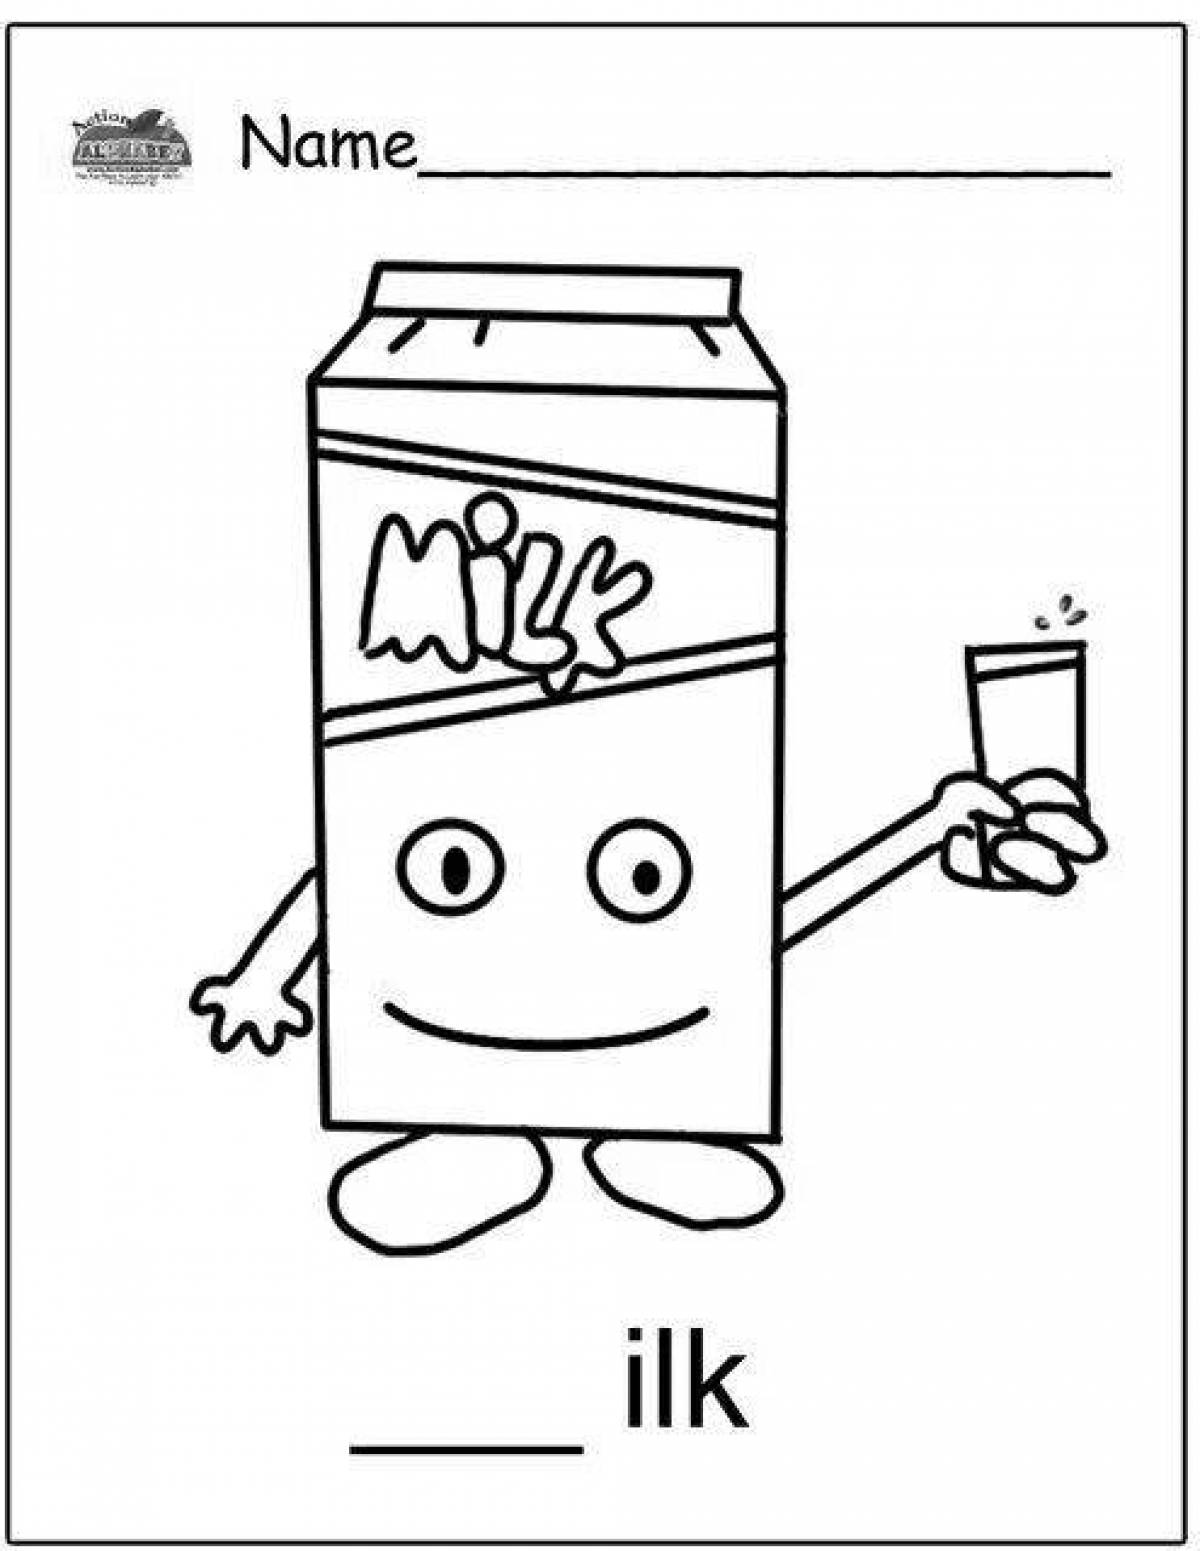 Calm milk coloring page